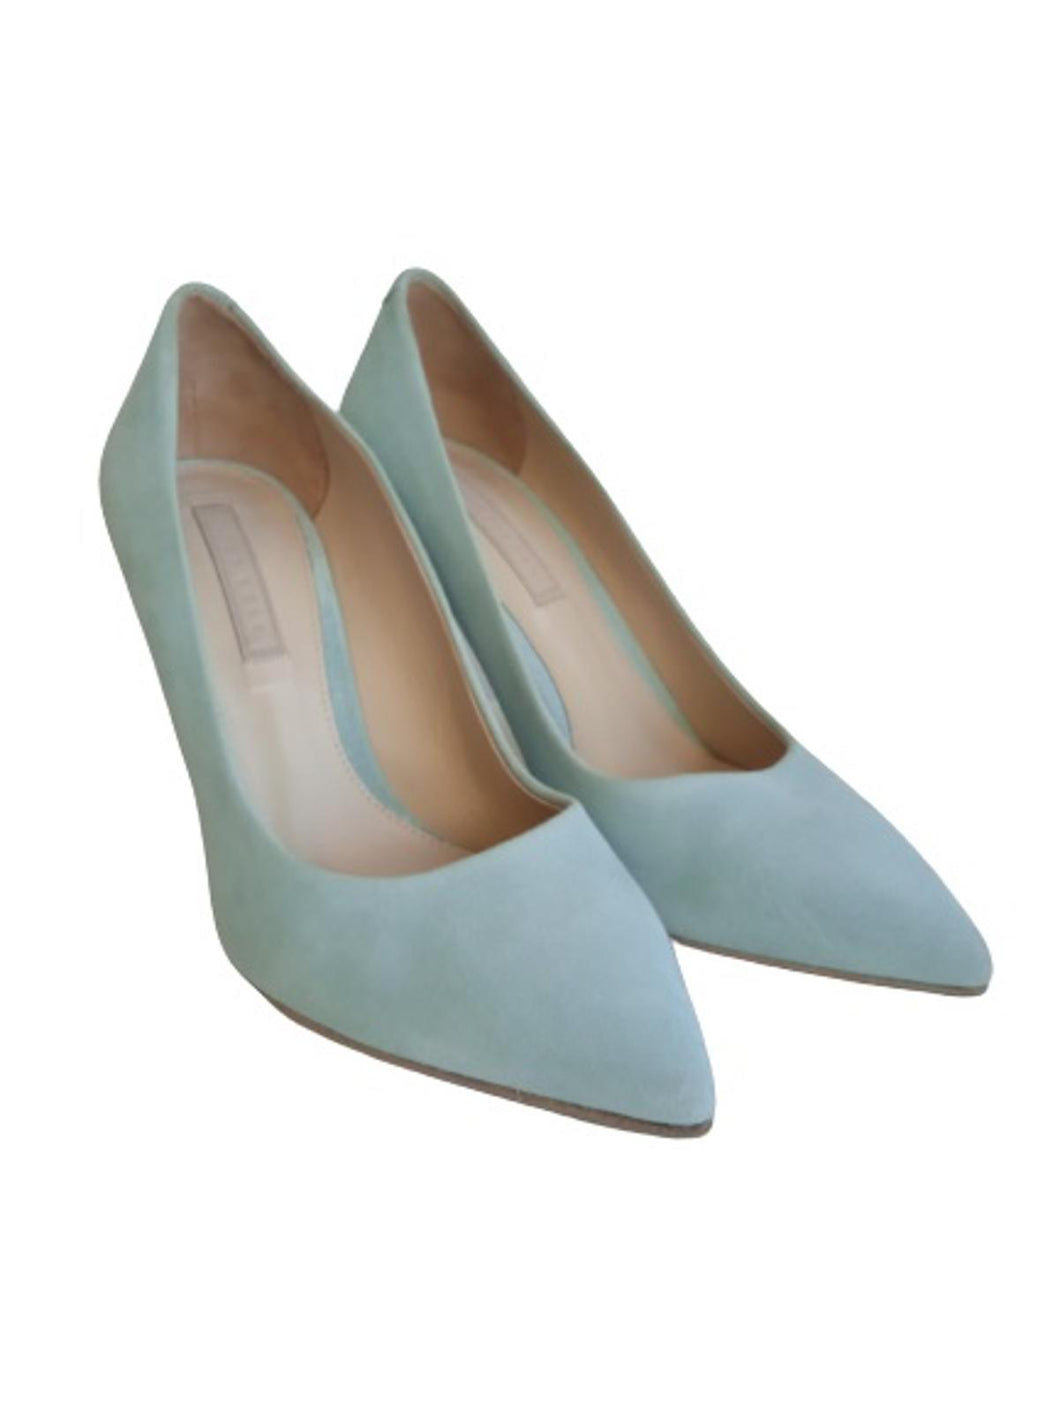 HUGO BOSS Ladies Celeste Blue Suede Pointed Court Shoes Size EU37 UK4